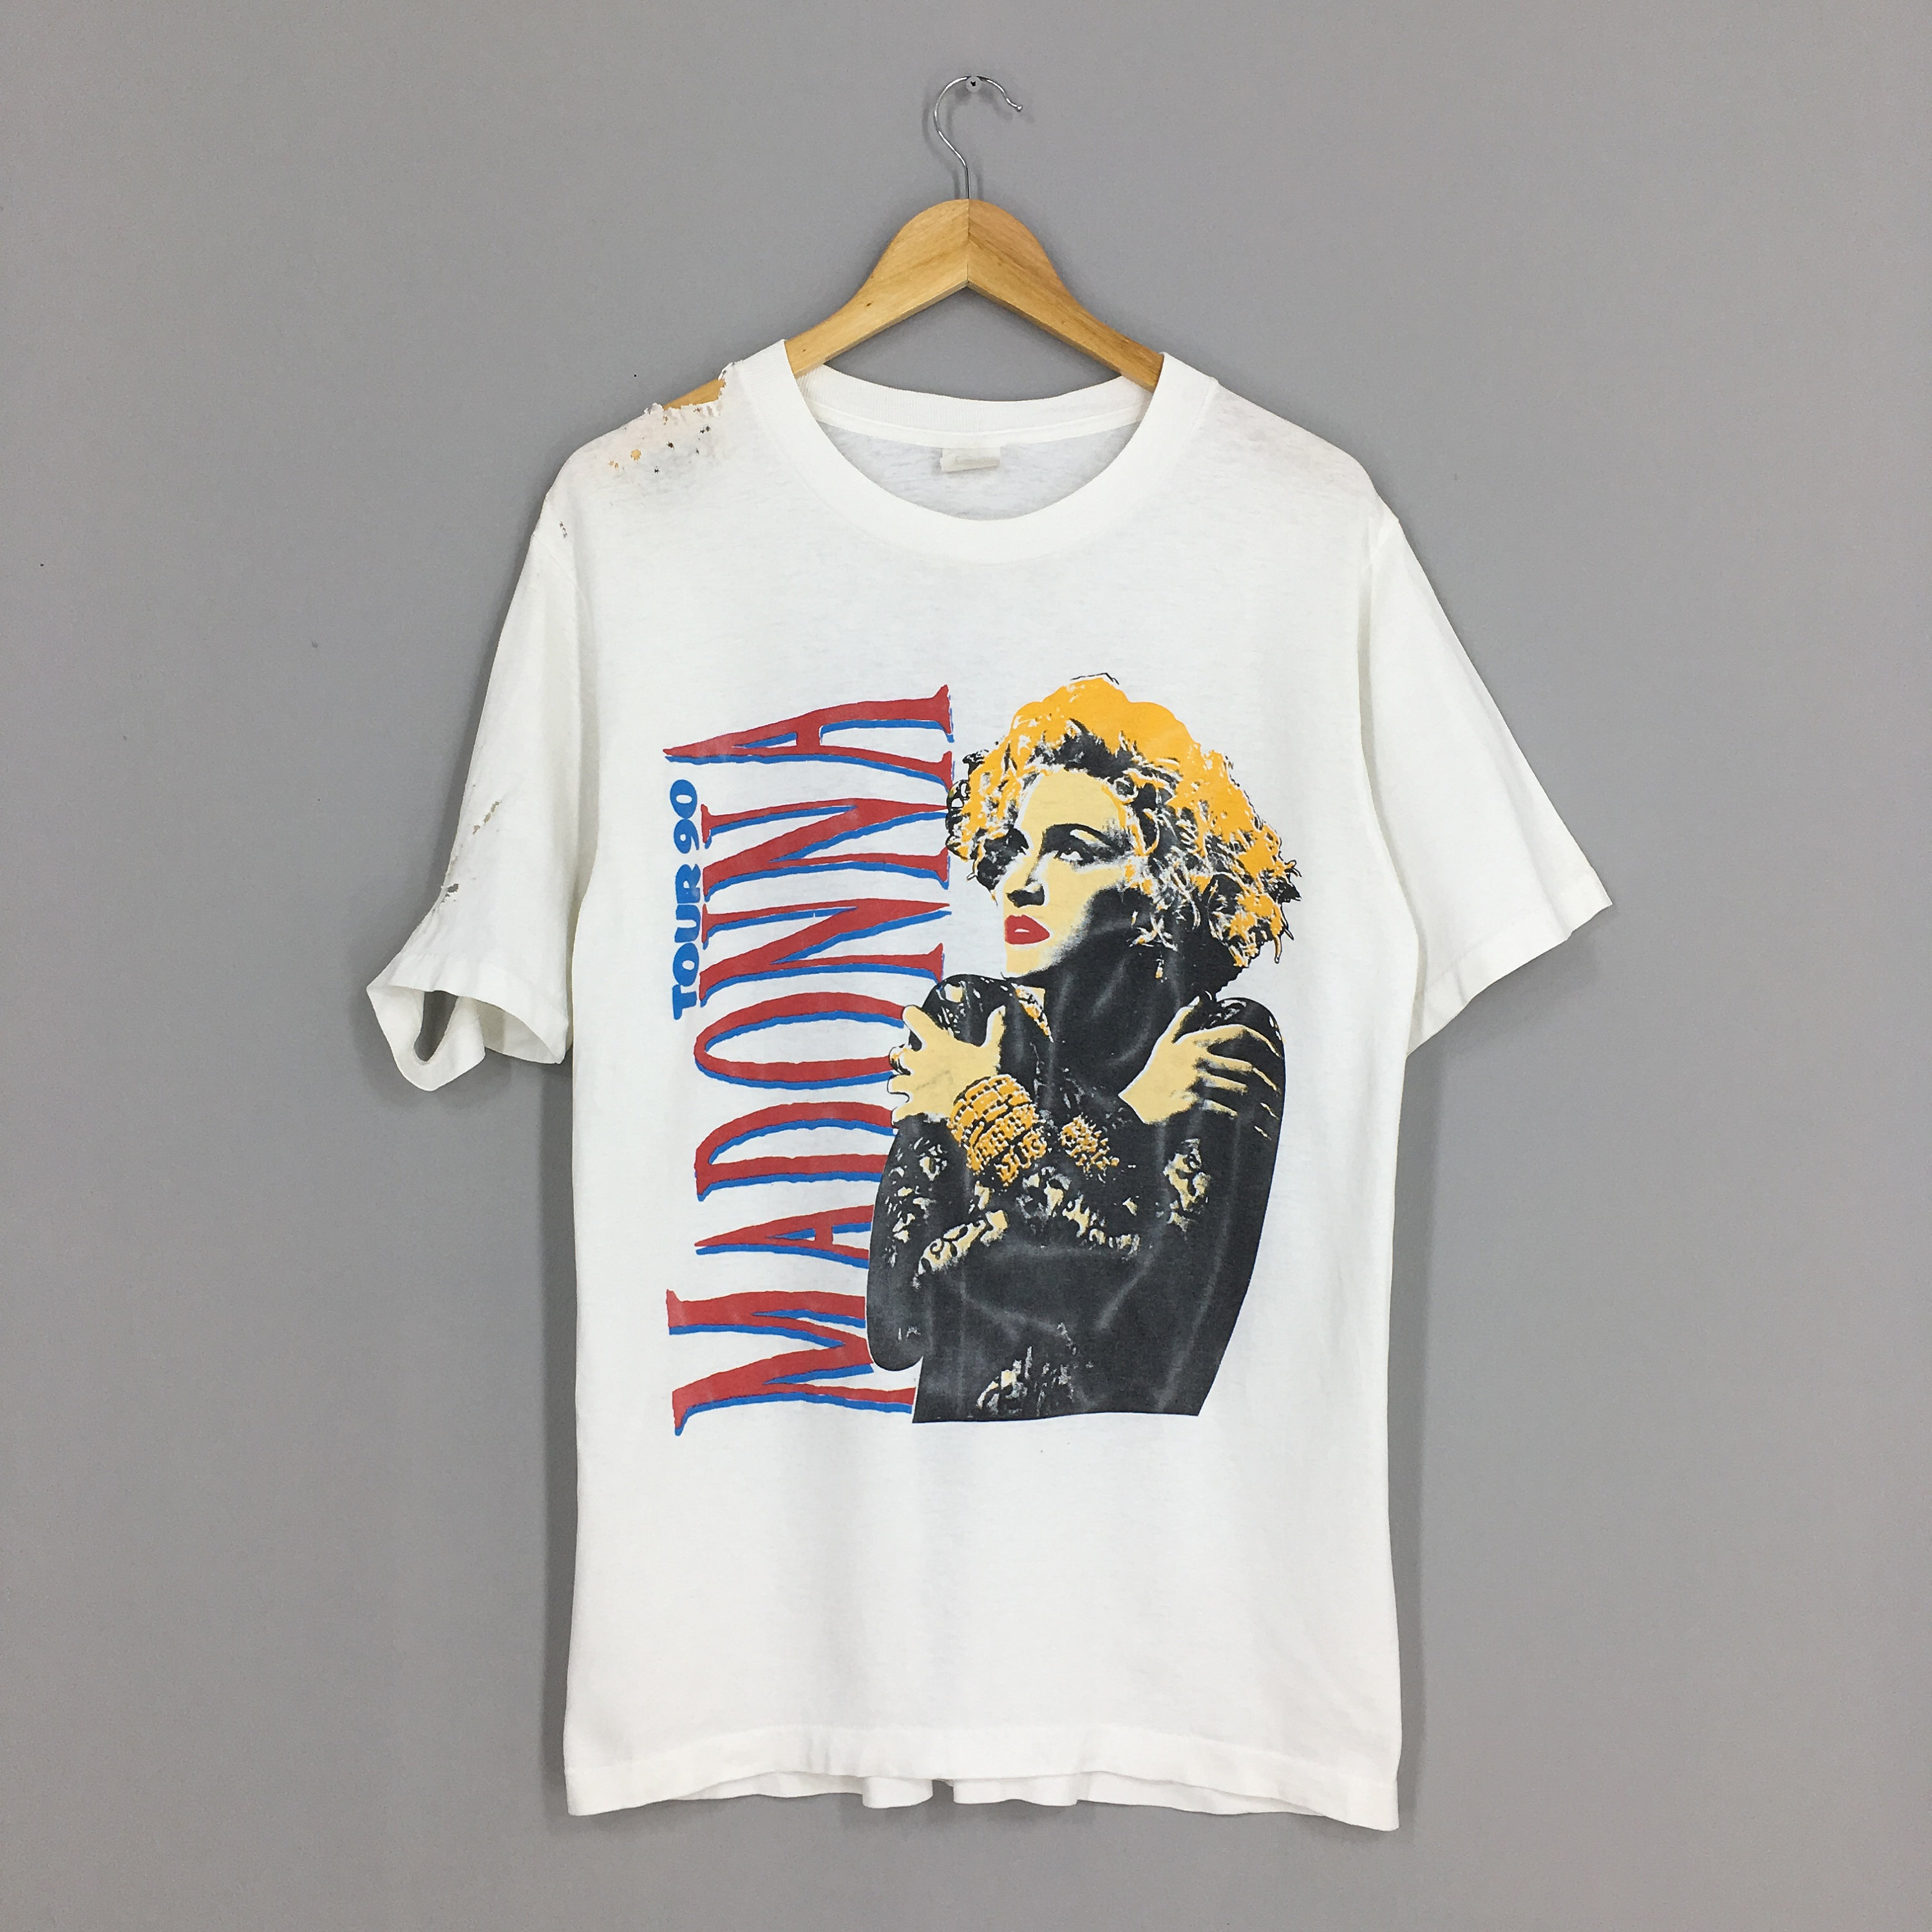 Vtg 1990 Madonna Blond Ambition Tour Concert T-Shirt L 90s Pop Muziek Hanes Blonde Kleding Gender-neutrale kleding volwassenen Tops & T-shirts T-shirts T-shirts met print 